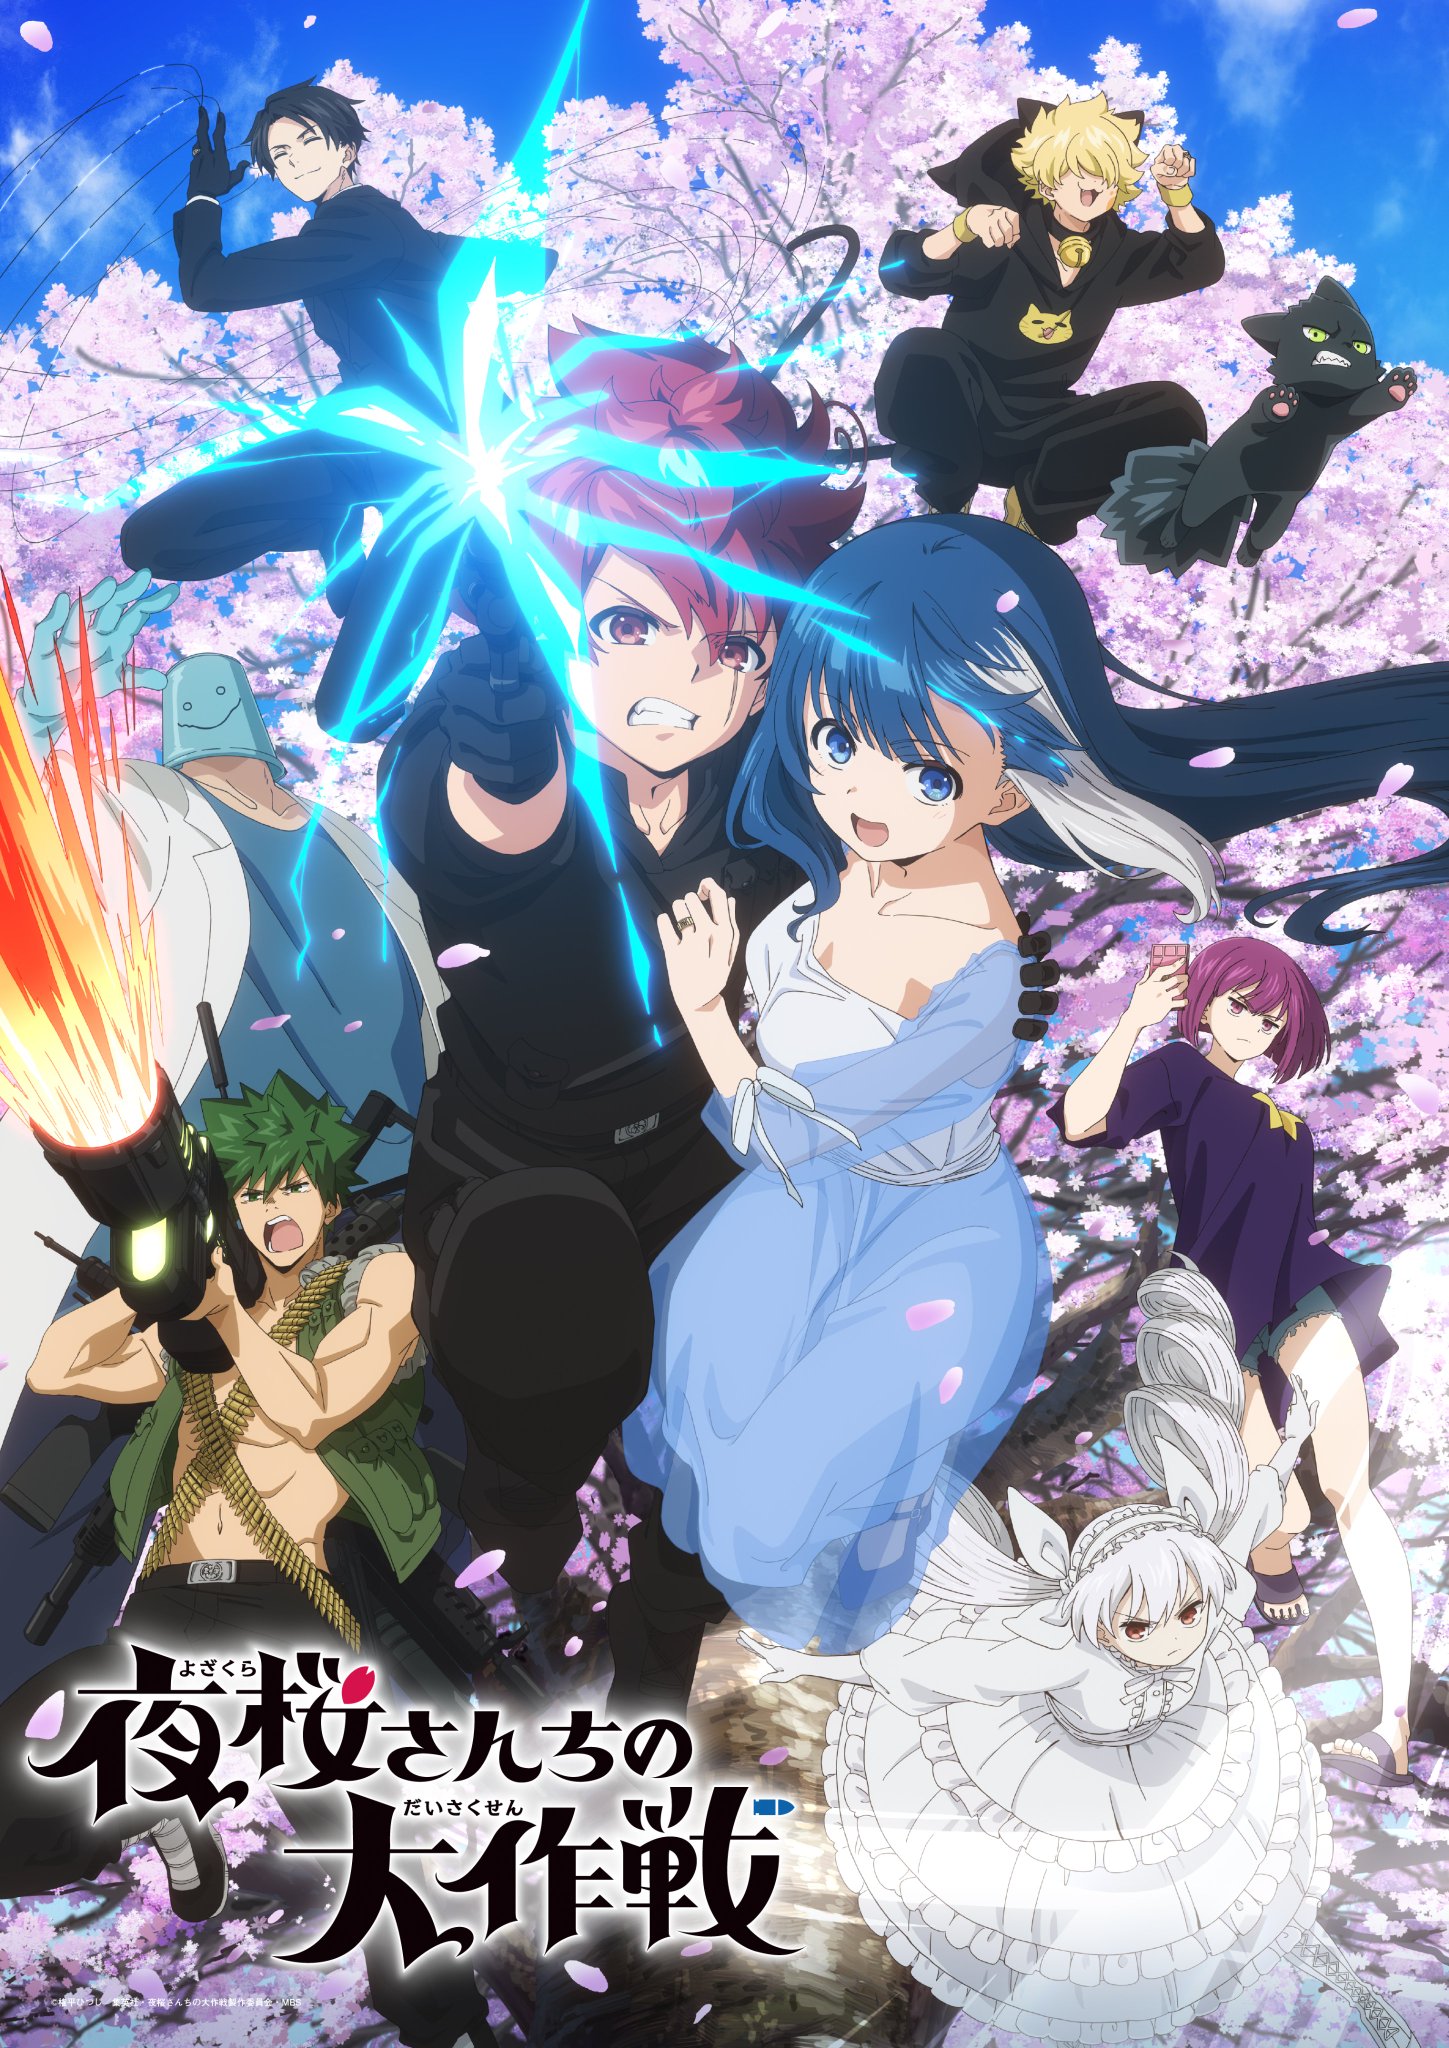 Shueisha Reveals a Chaotic New Visual for ‘Mission: Yozakura Family’ Anime cover